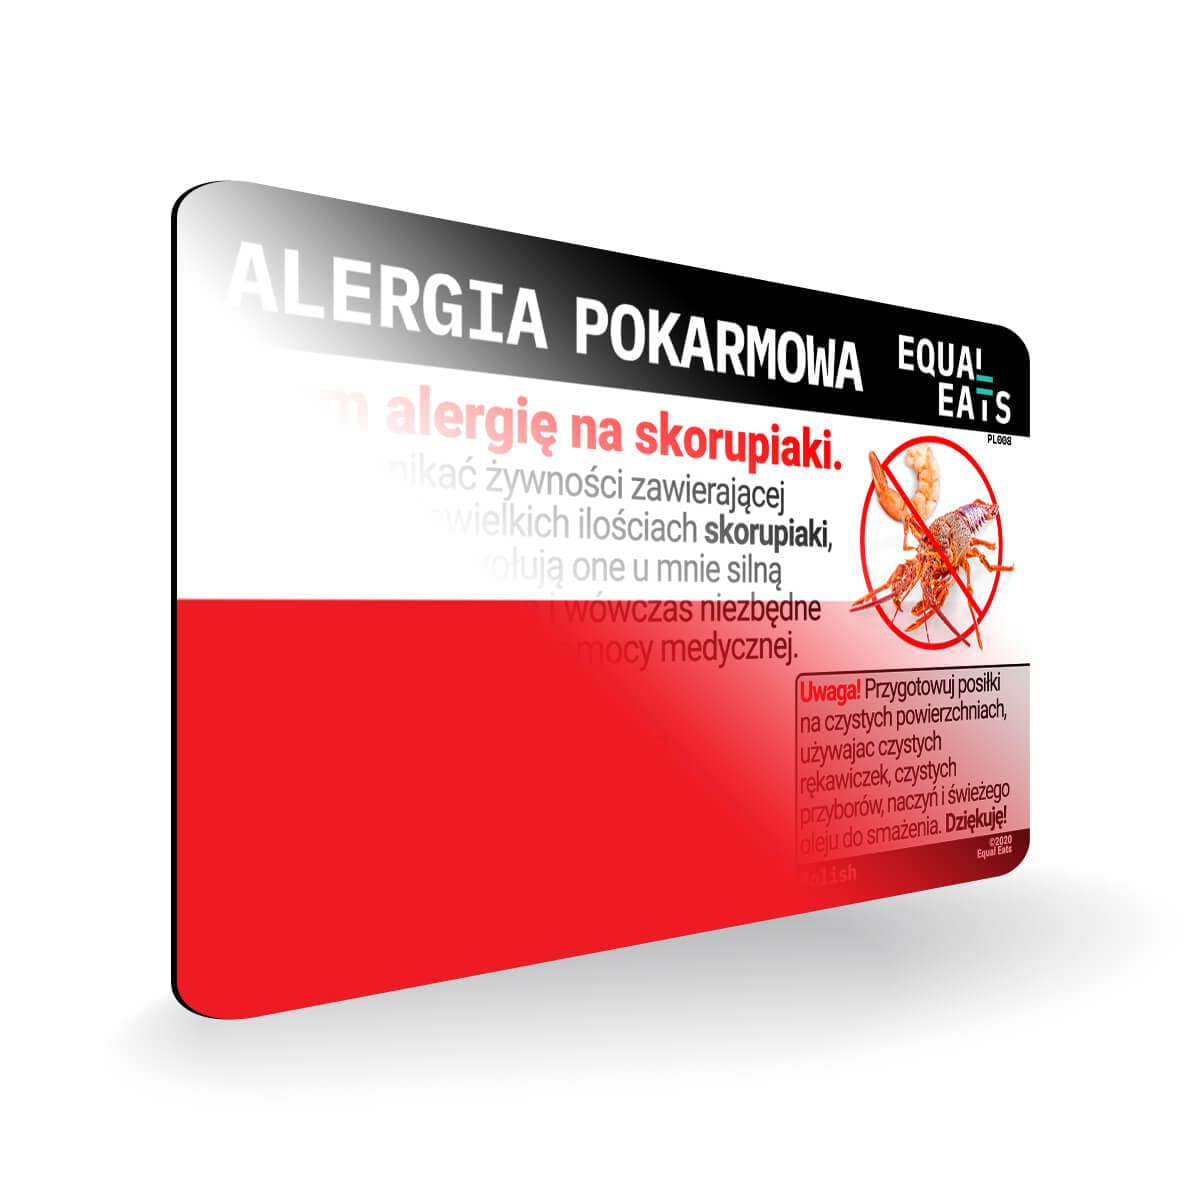 Crustacean Allergy in Polish. Crustacean Allergy Card for Poland